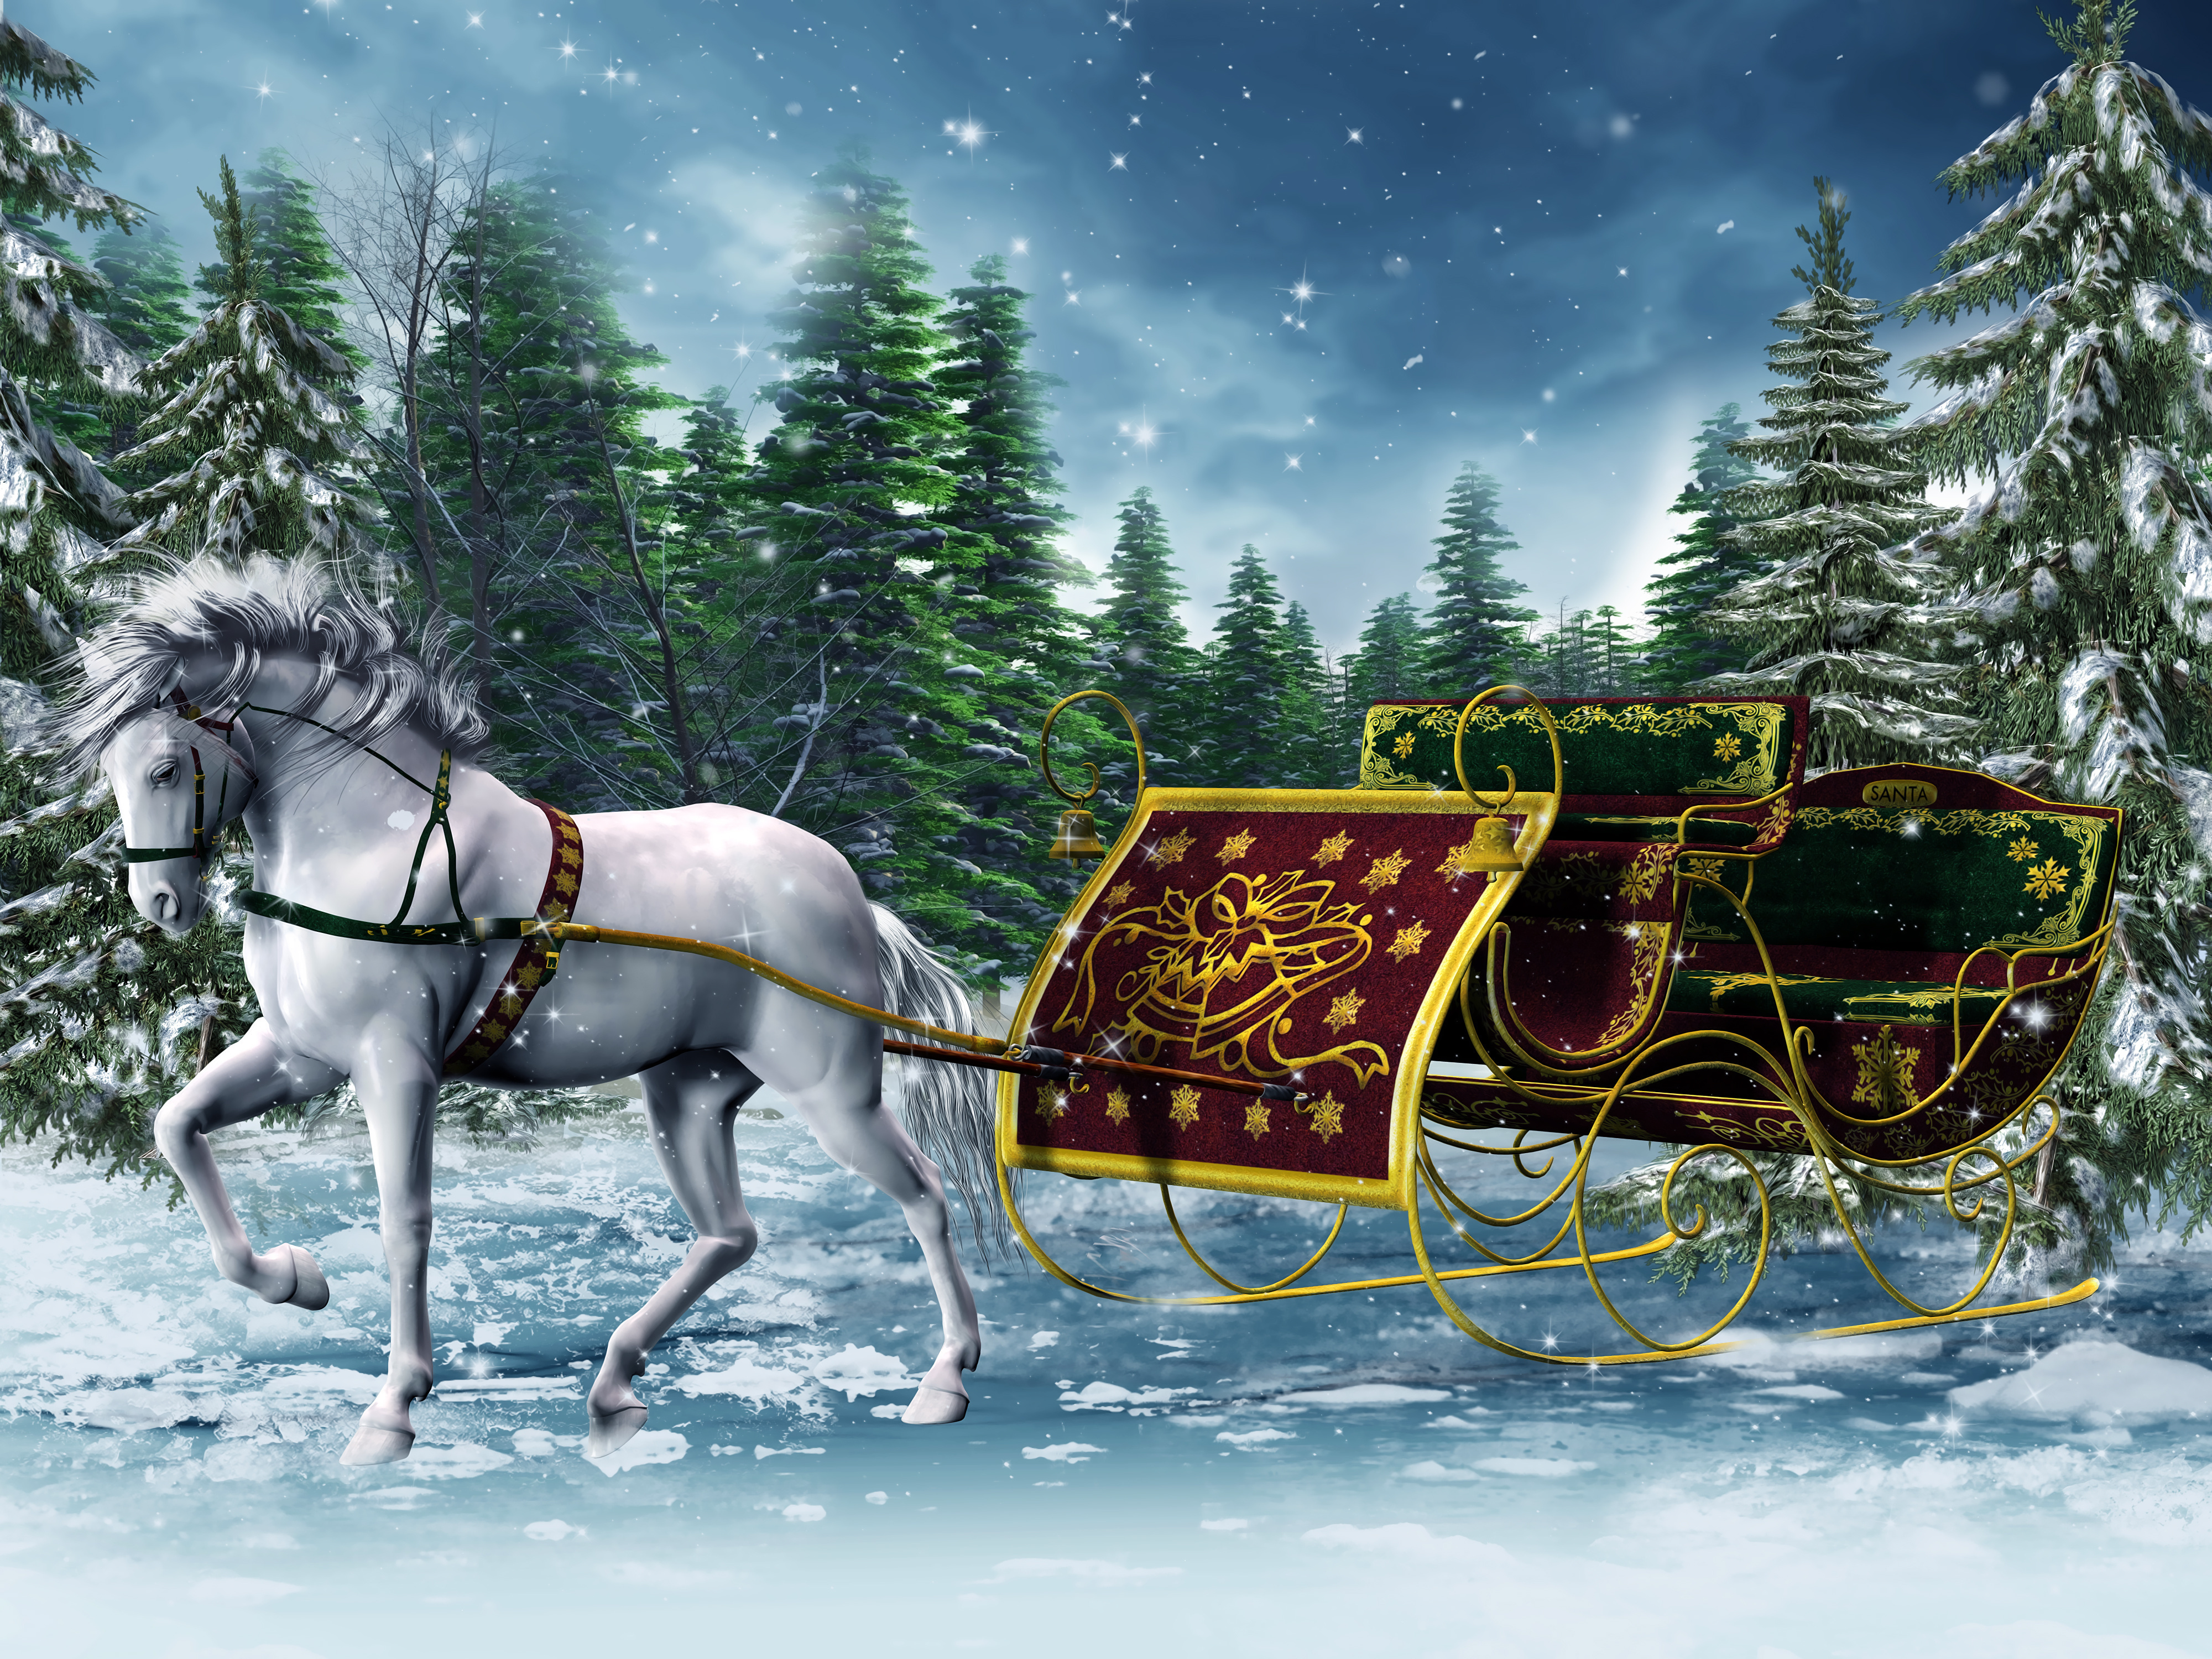 Christmas Holiday Horse Sleigh Snow White Winter 4000x3000